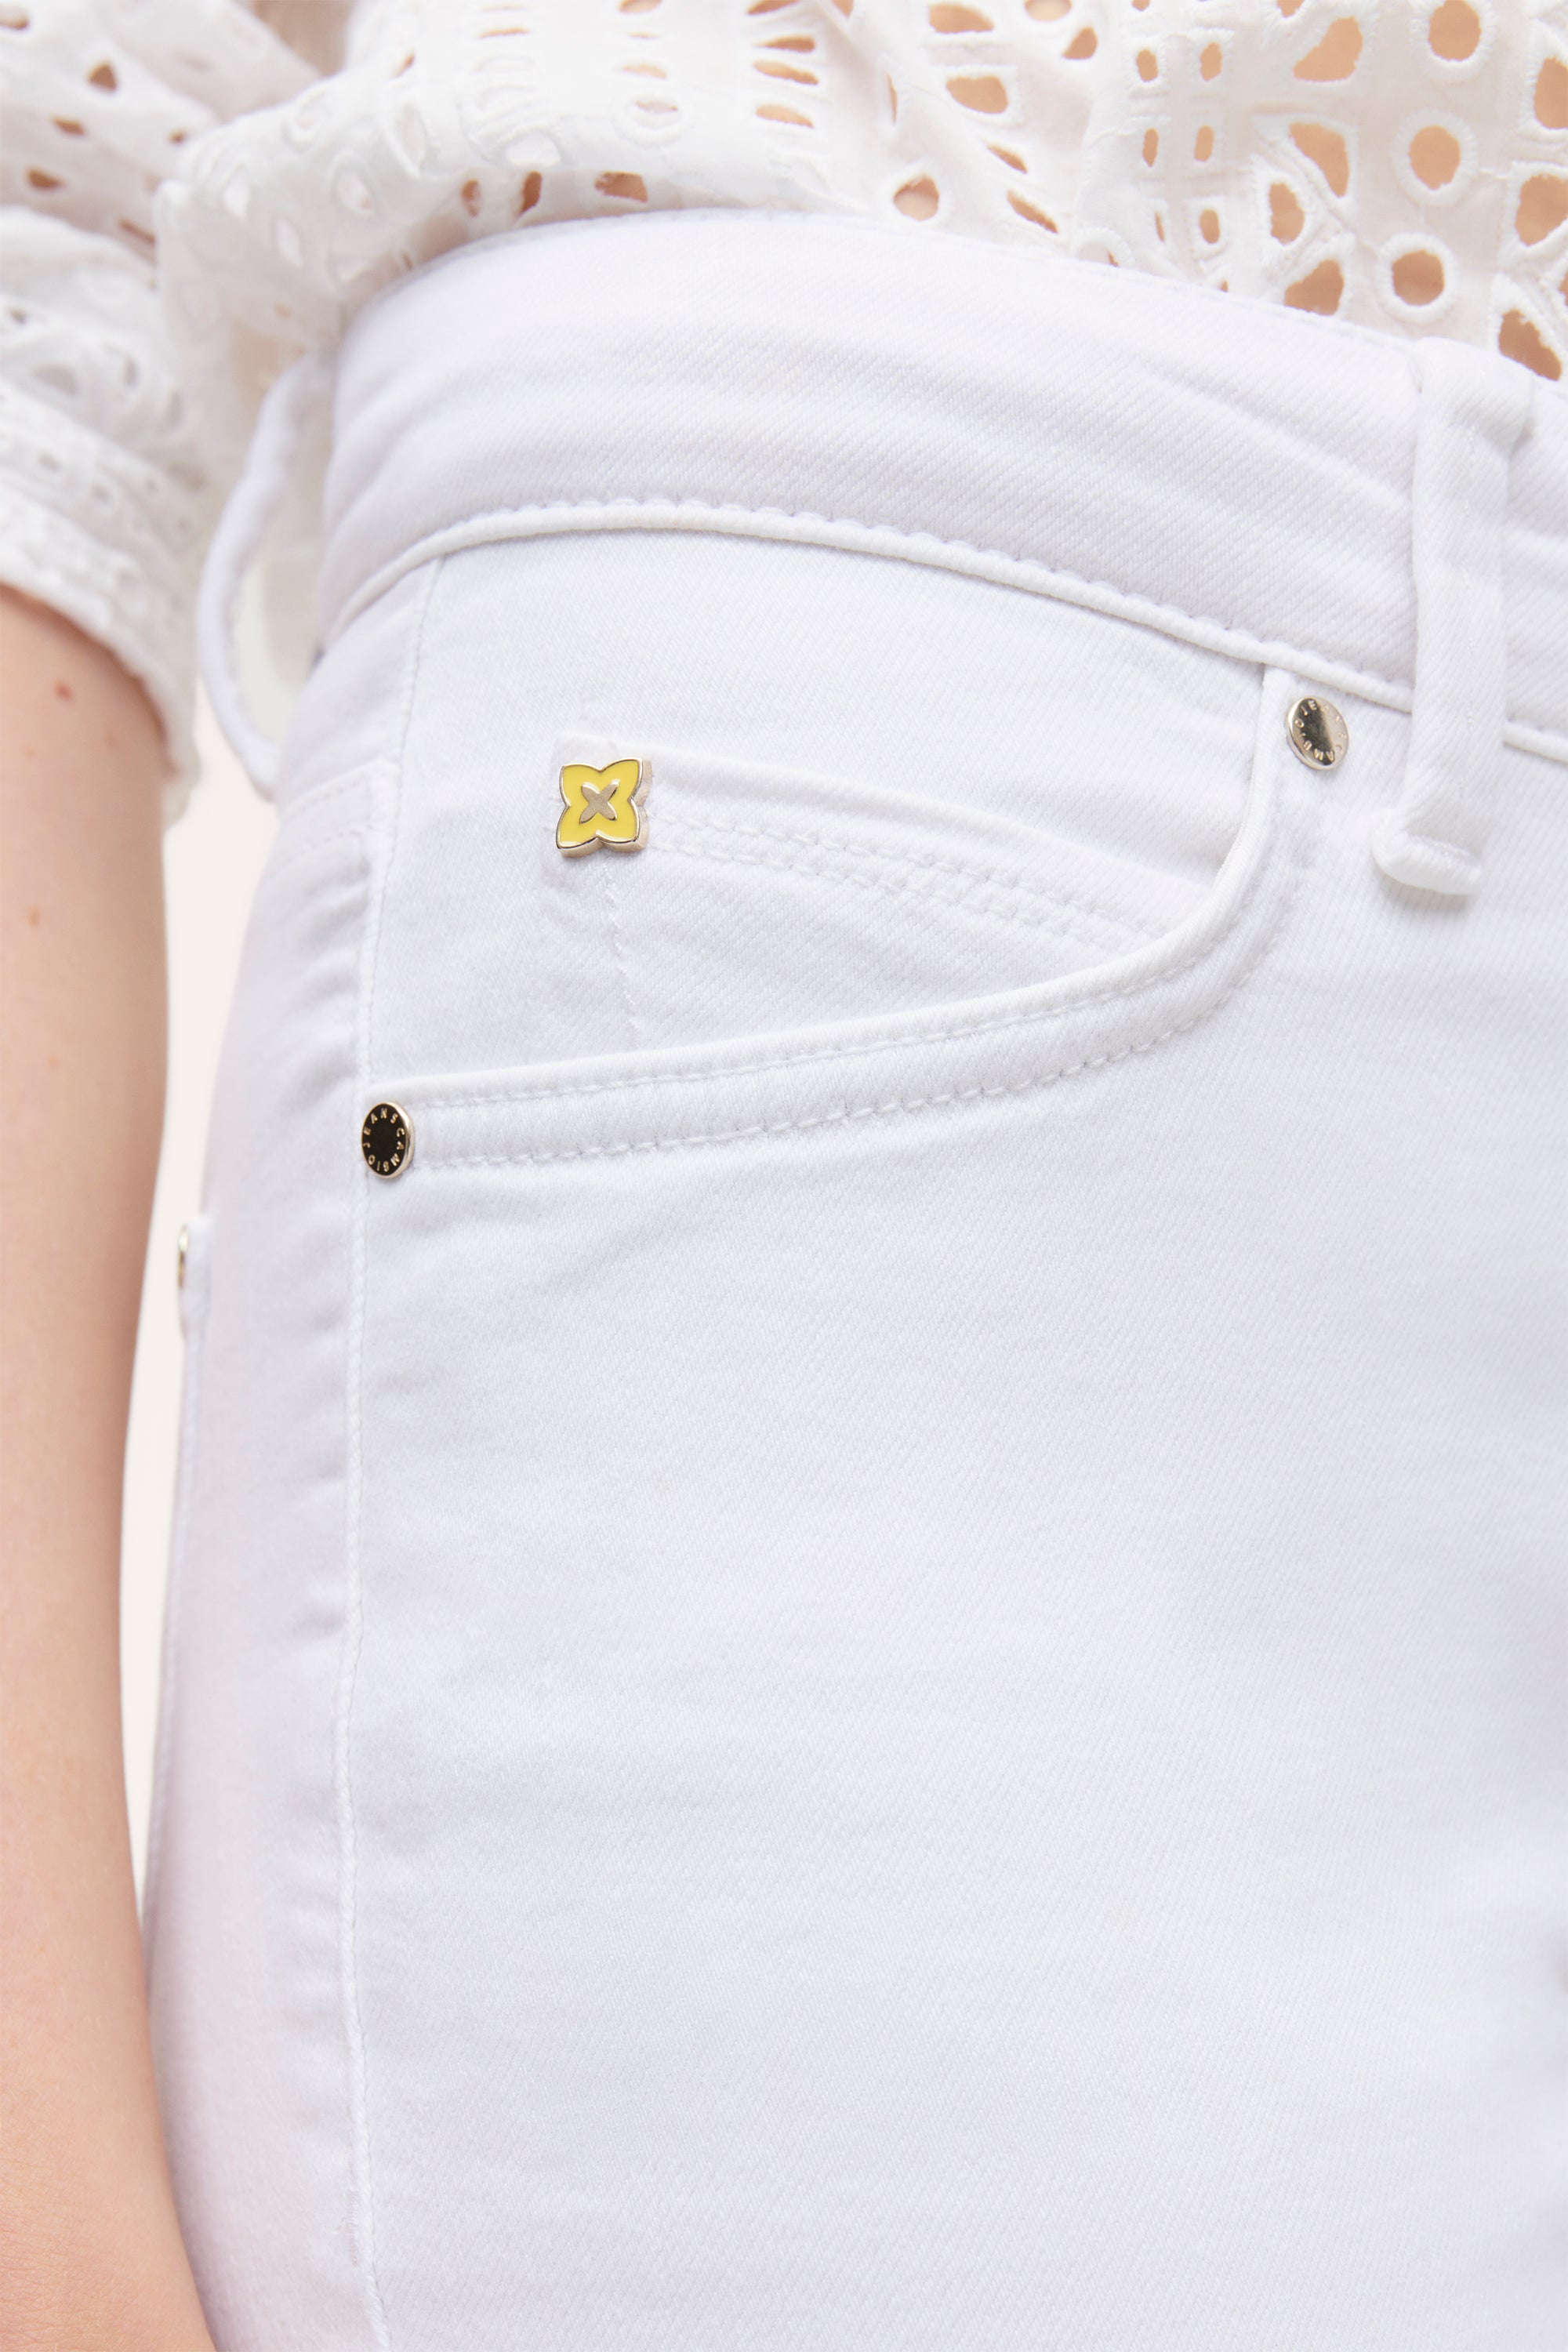 Beschrijving waterbestendig kruis Cambio witte jeans Paris flared | Anna Xqlusive